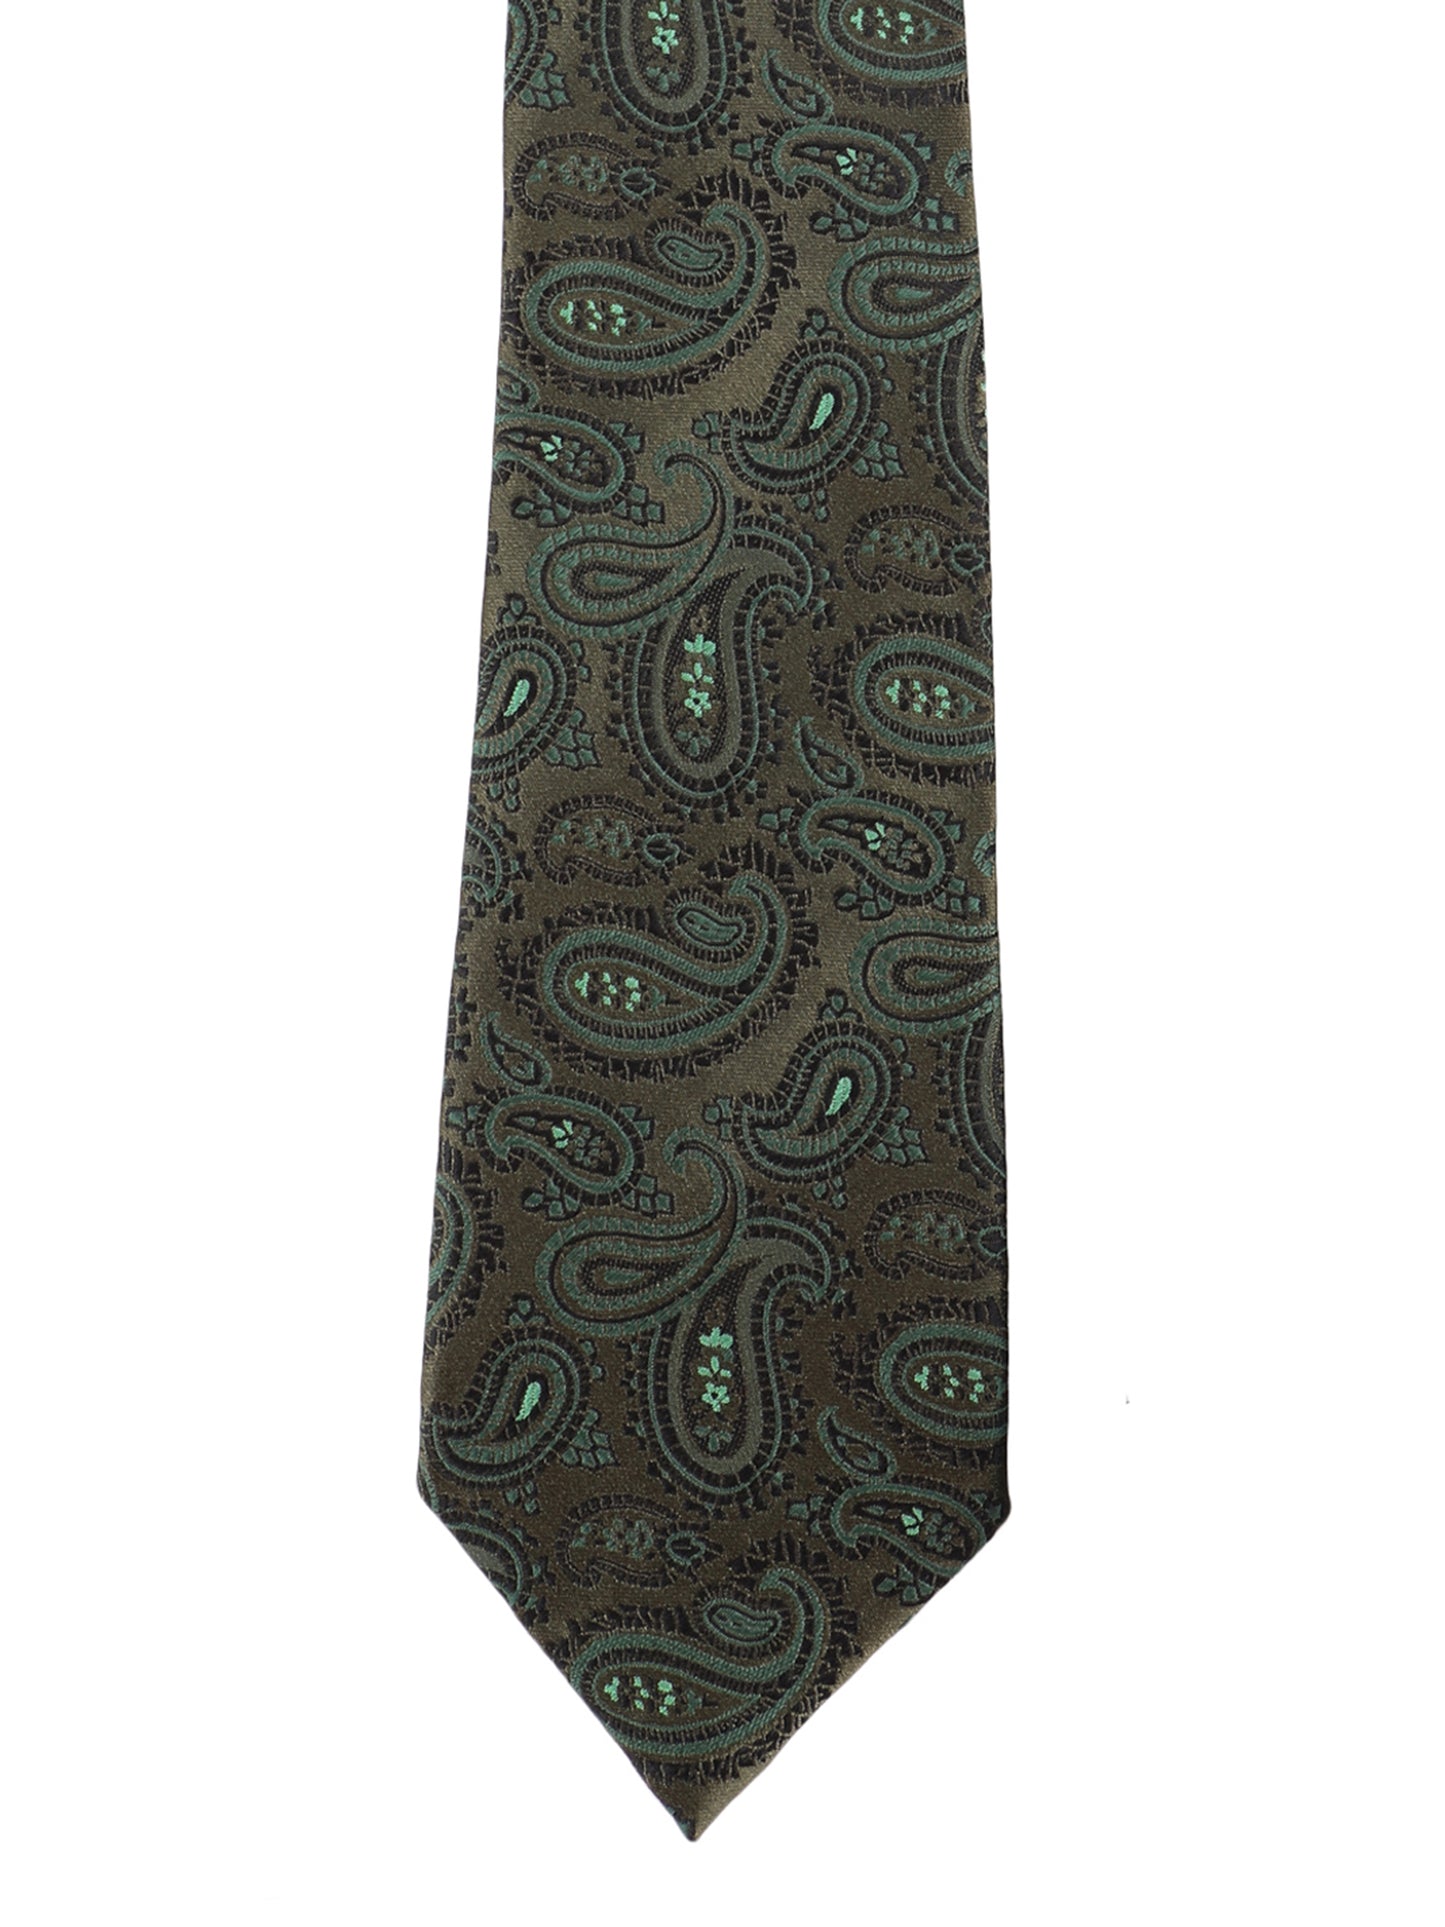 Alvaro Castagnino Microfiber Green Colored Necktie for Men